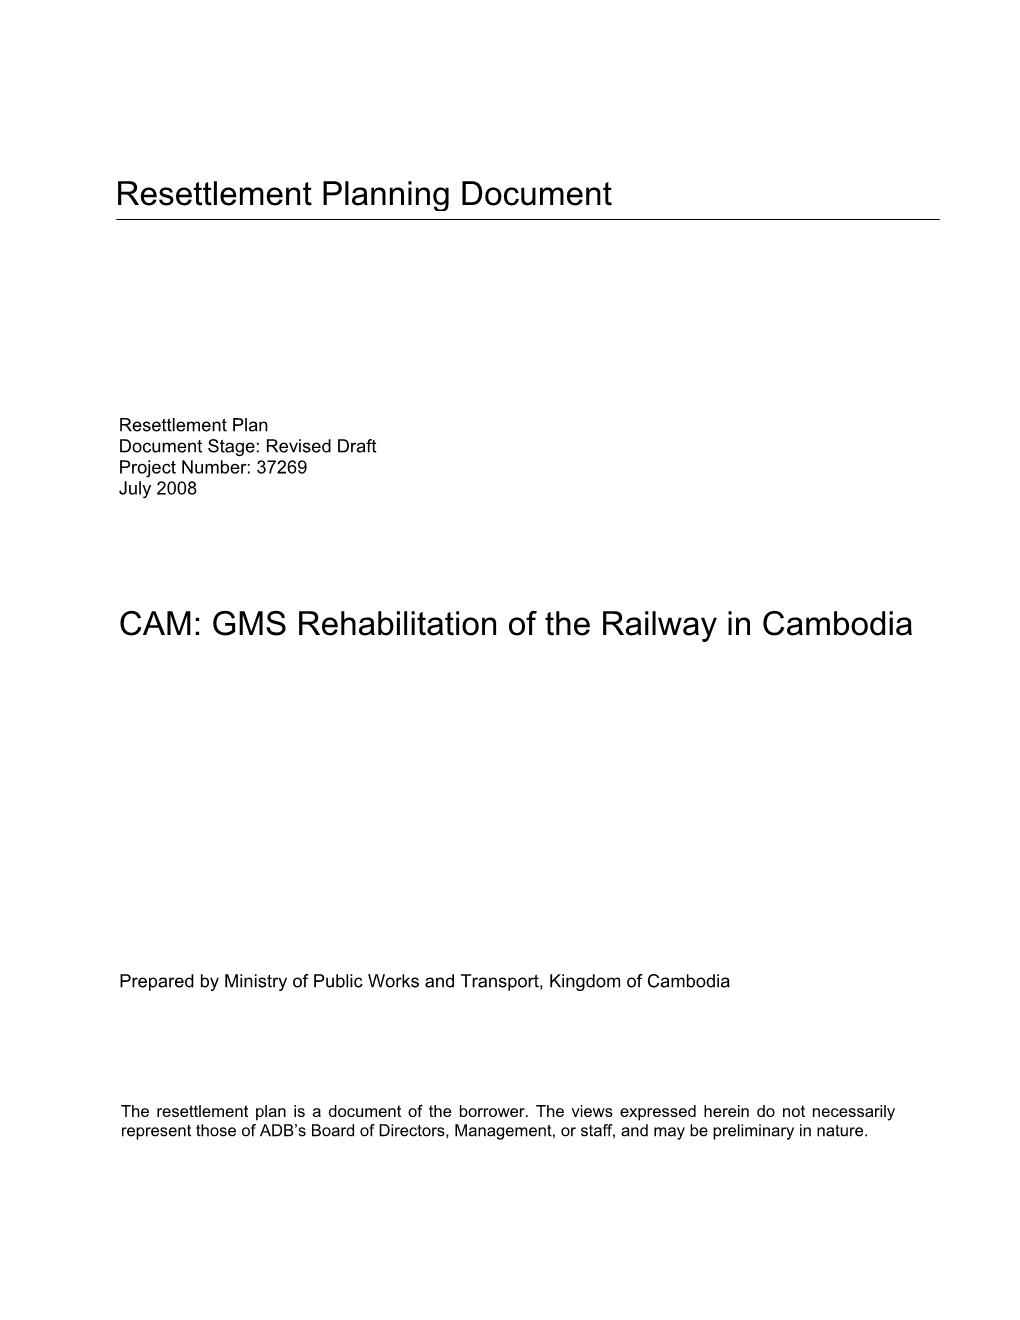 GMS Rehabilitation of the Railway in Cambodia